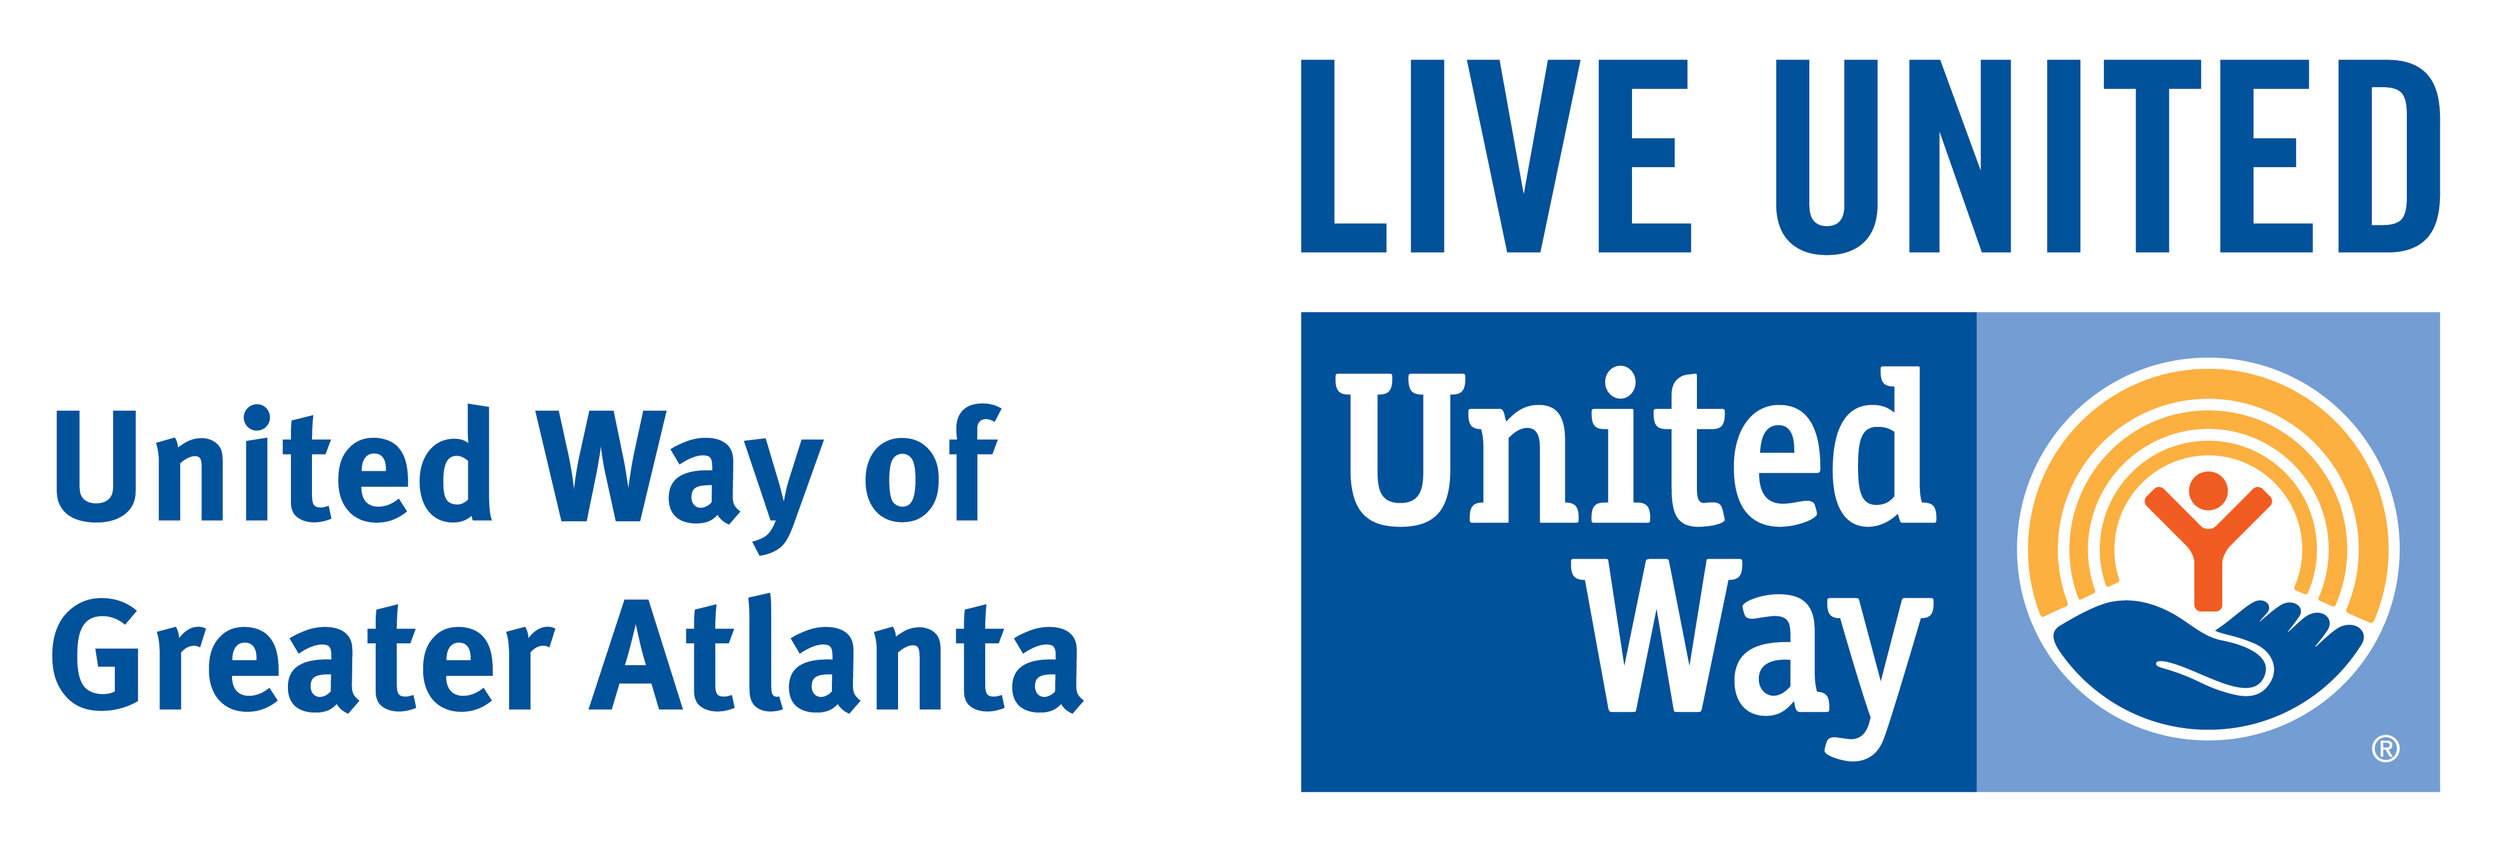 United Way logo.jpg